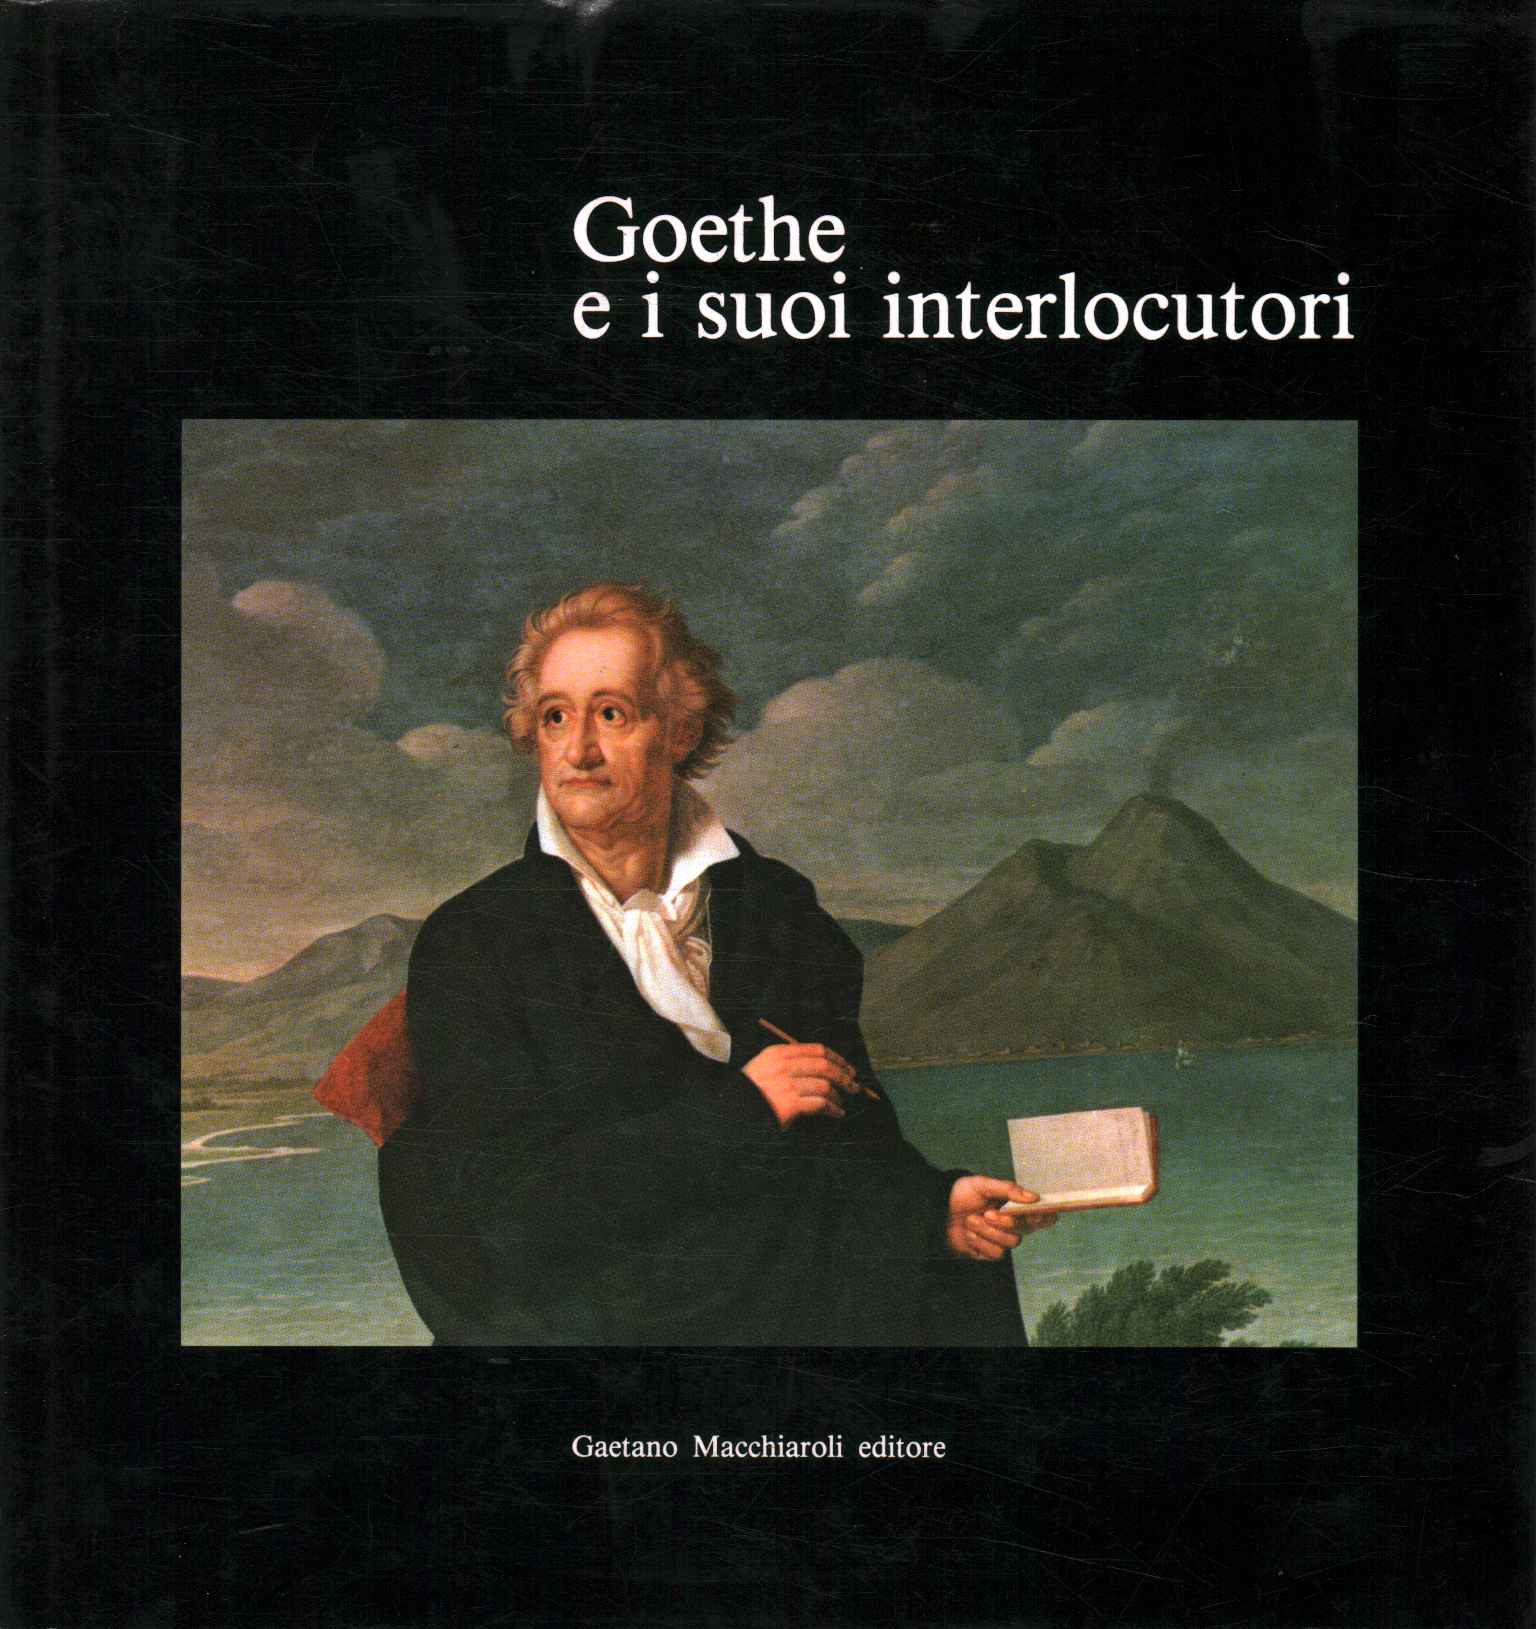 Goethe and his interlocutors